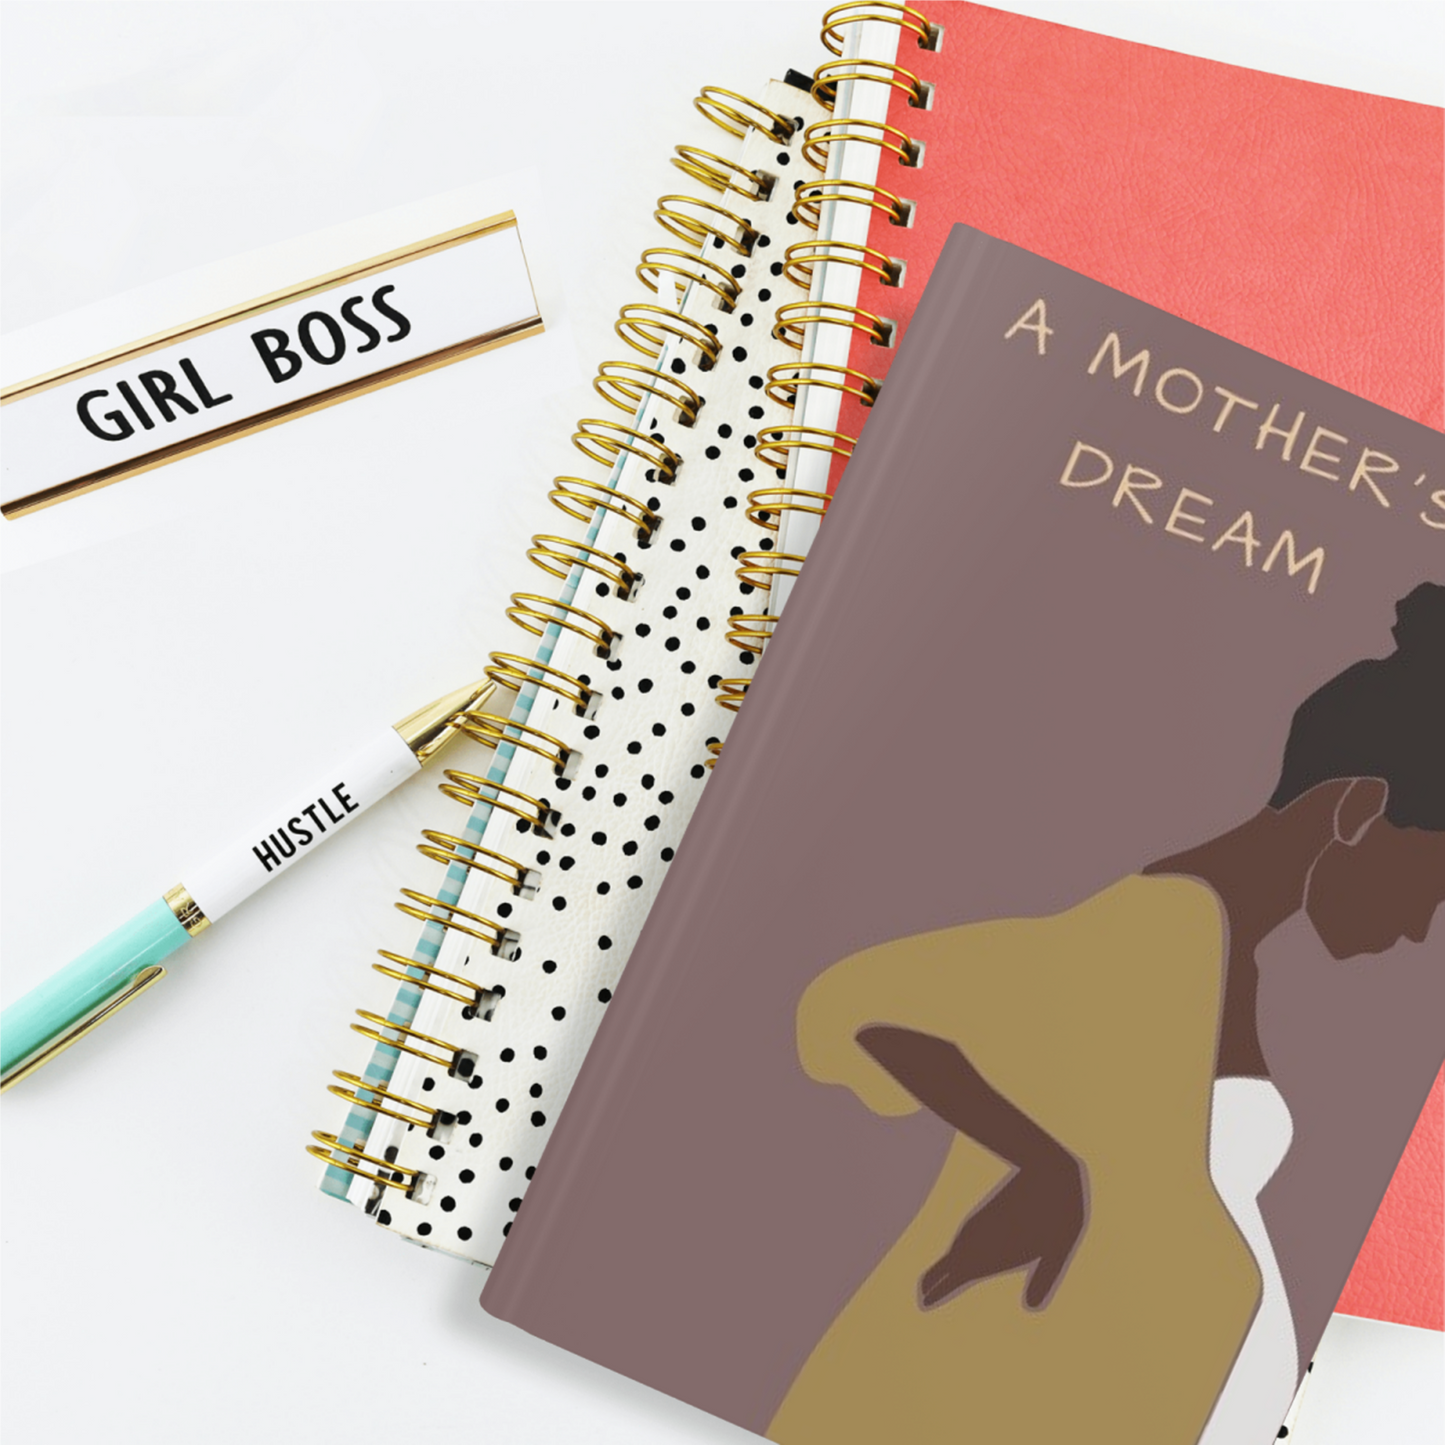 A Mother's Dream: Journal